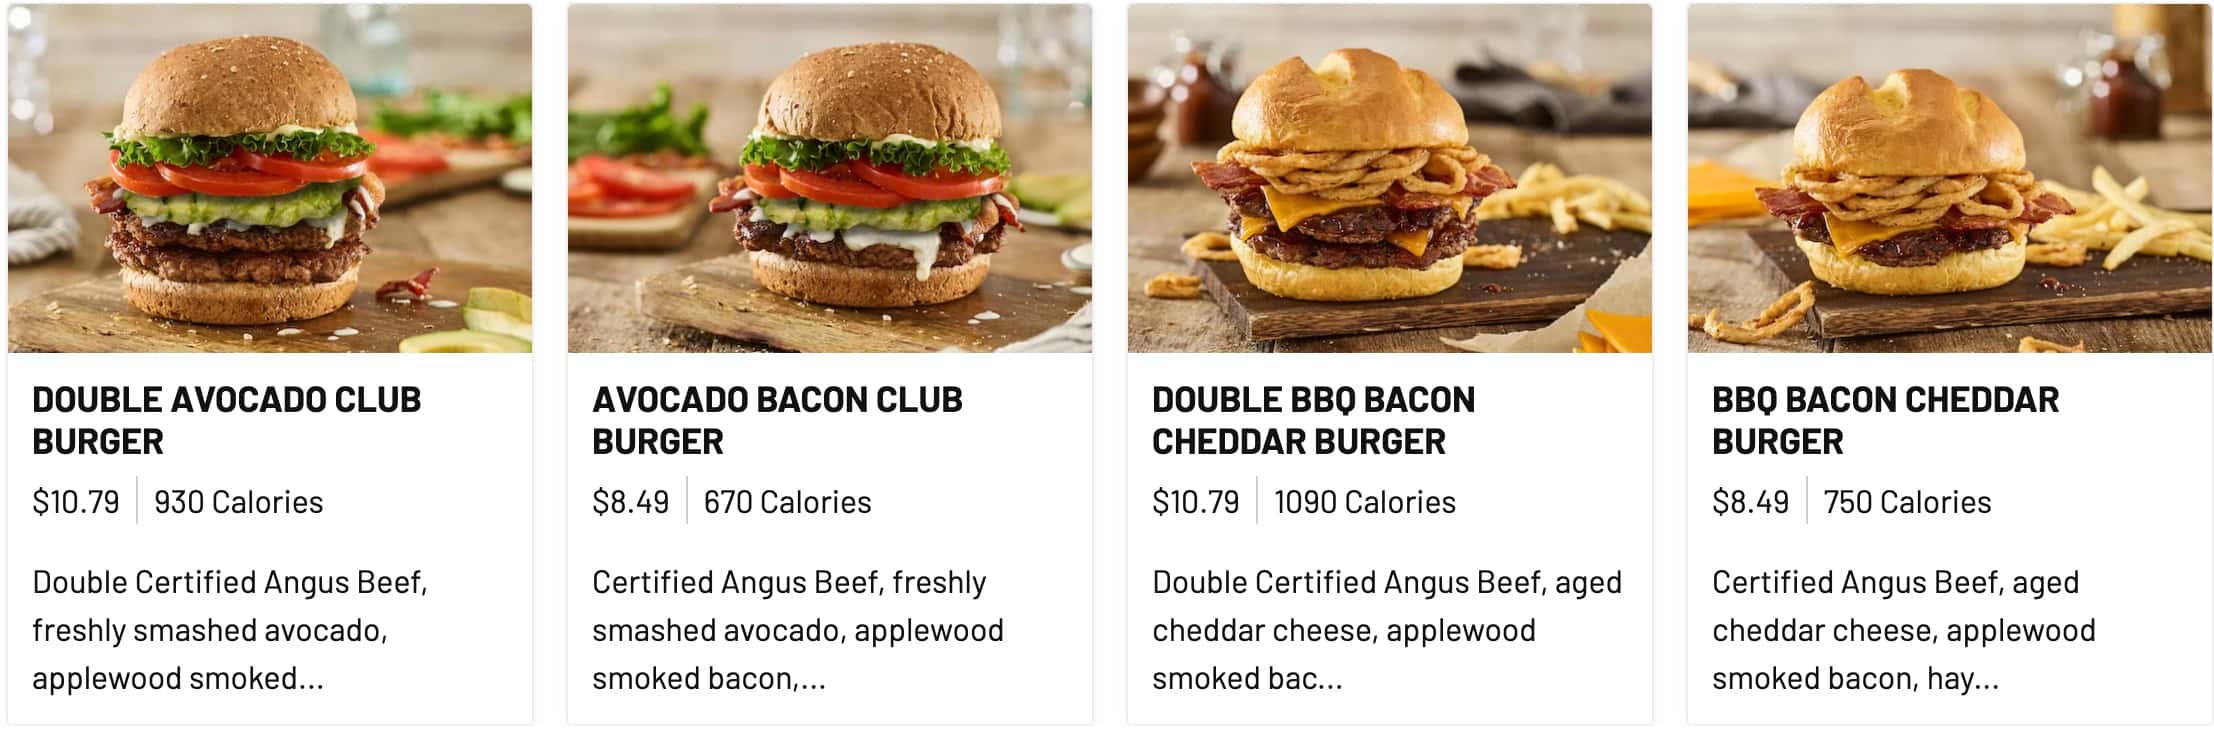 Smashburger Burgers Menu